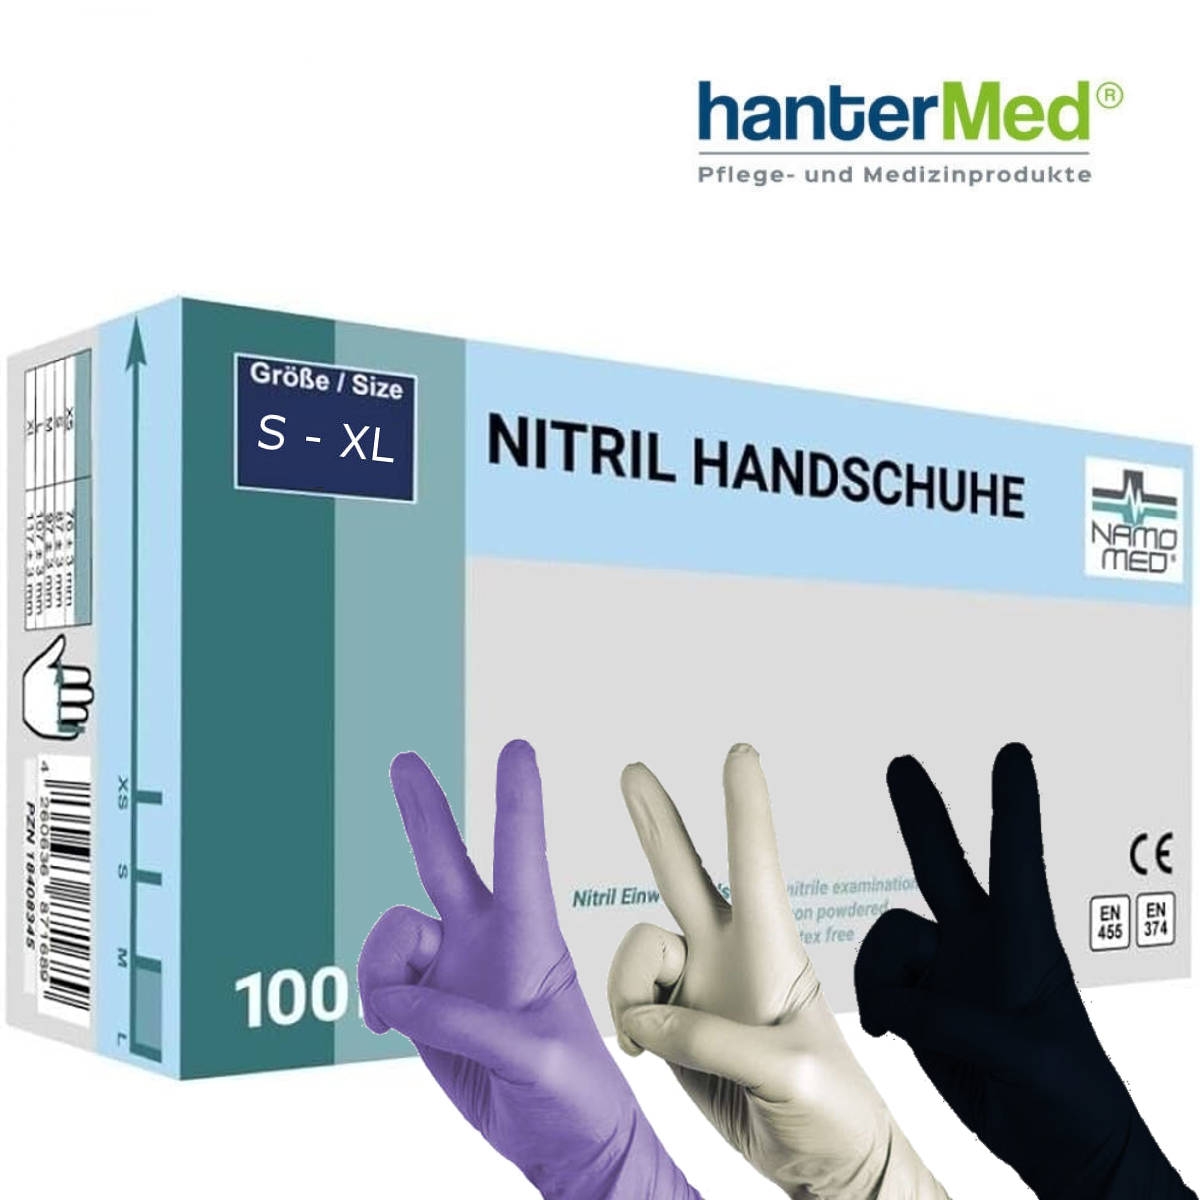 NamoMed® Nitril Handschuhe schwarz weiß violett S-XL, VE10